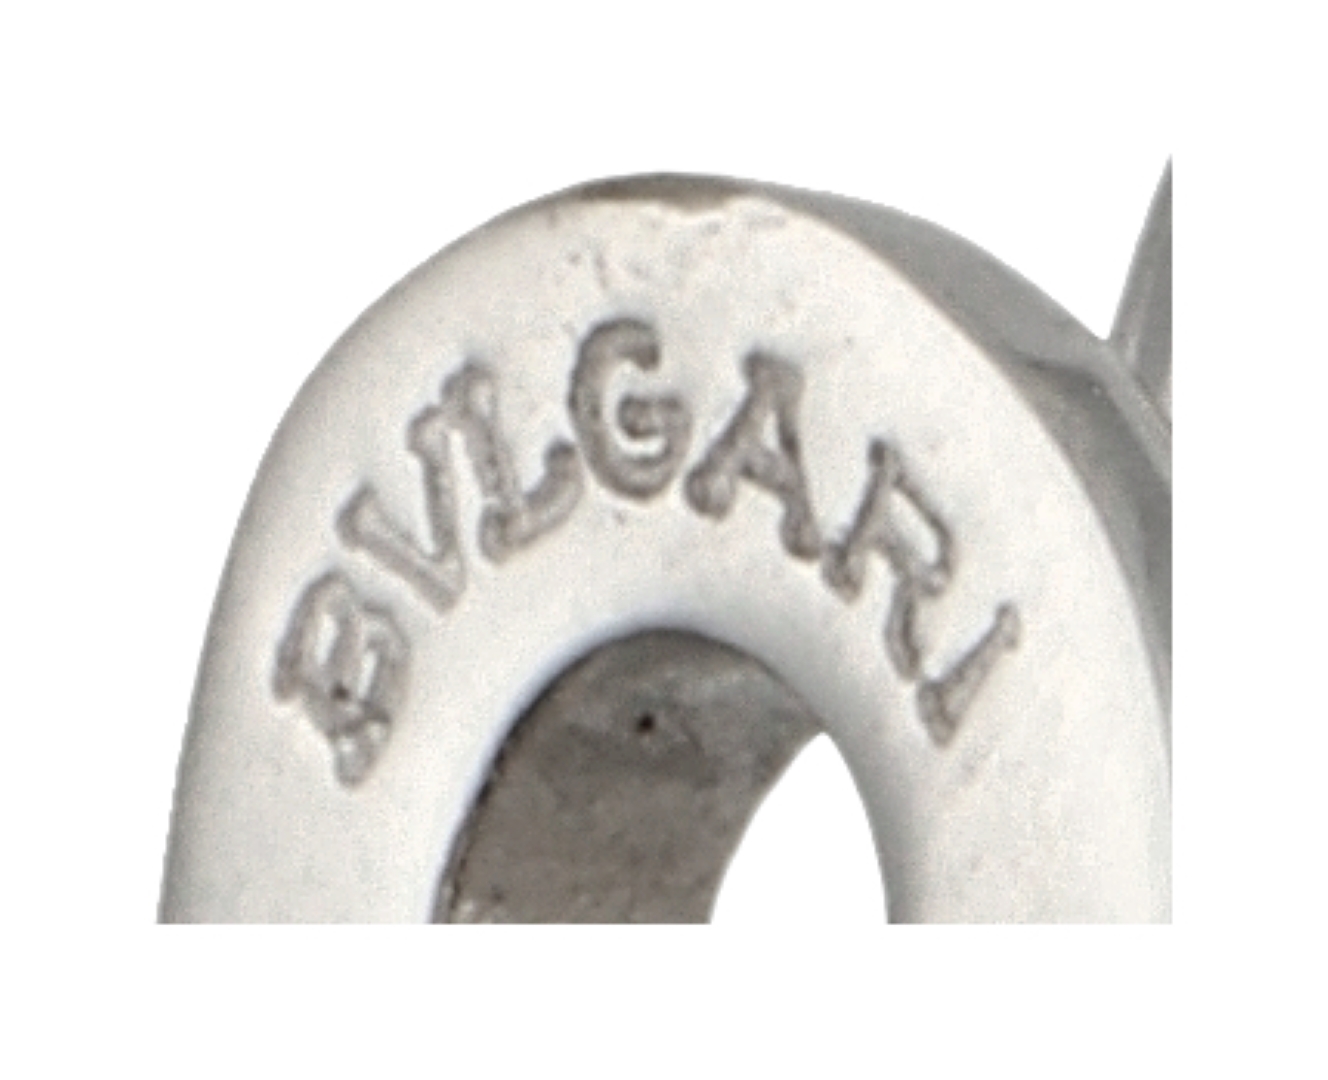 No Reserve - Bvlgari 18K white gold 'Parentesi' stud earrings set with approx. 0.52 ct. diamond. - Image 3 of 6